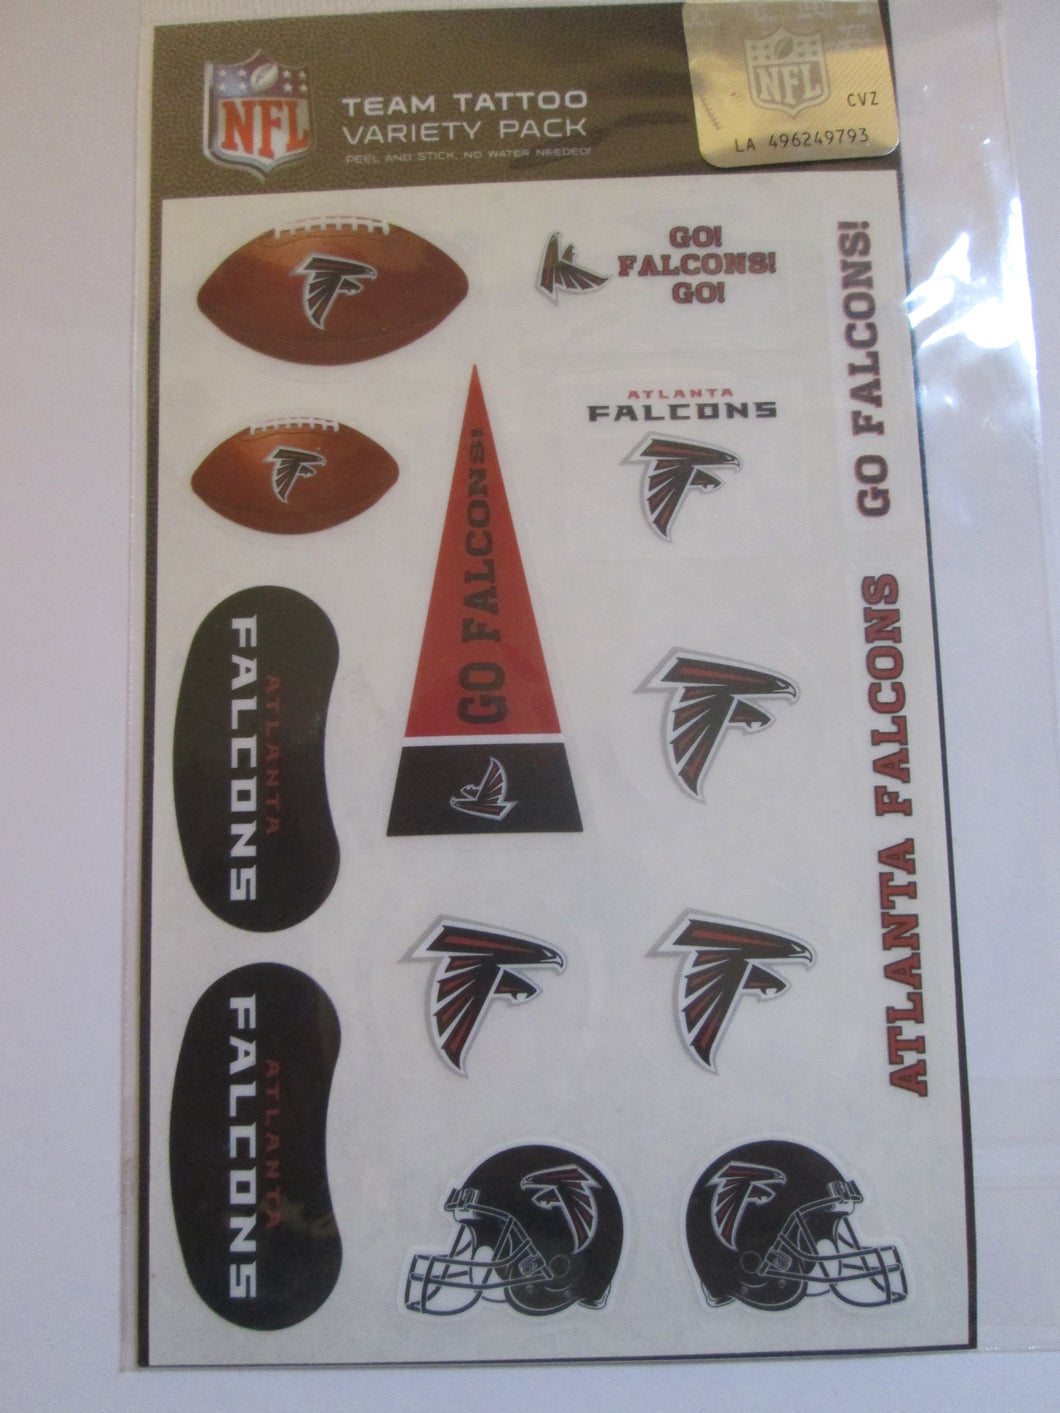 Atlanta Falcons NFL Team Tattoo Variety Pack